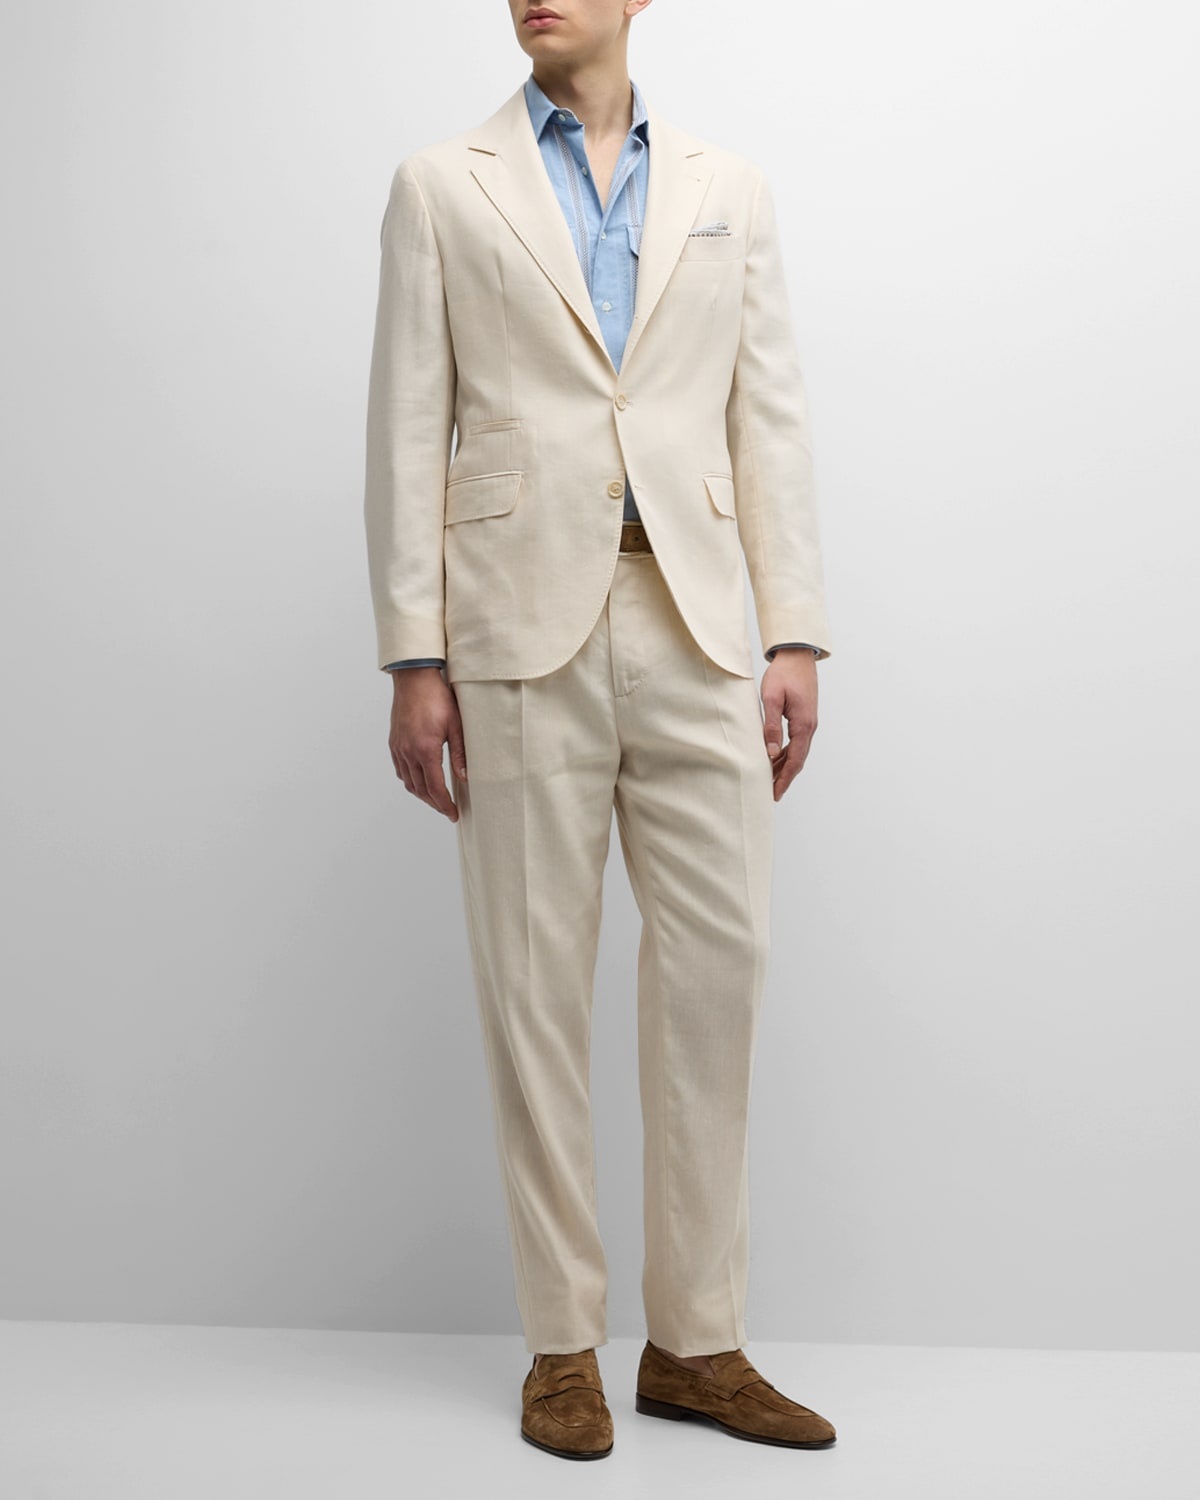 Men's Linen and Wool Solid Suit - 2